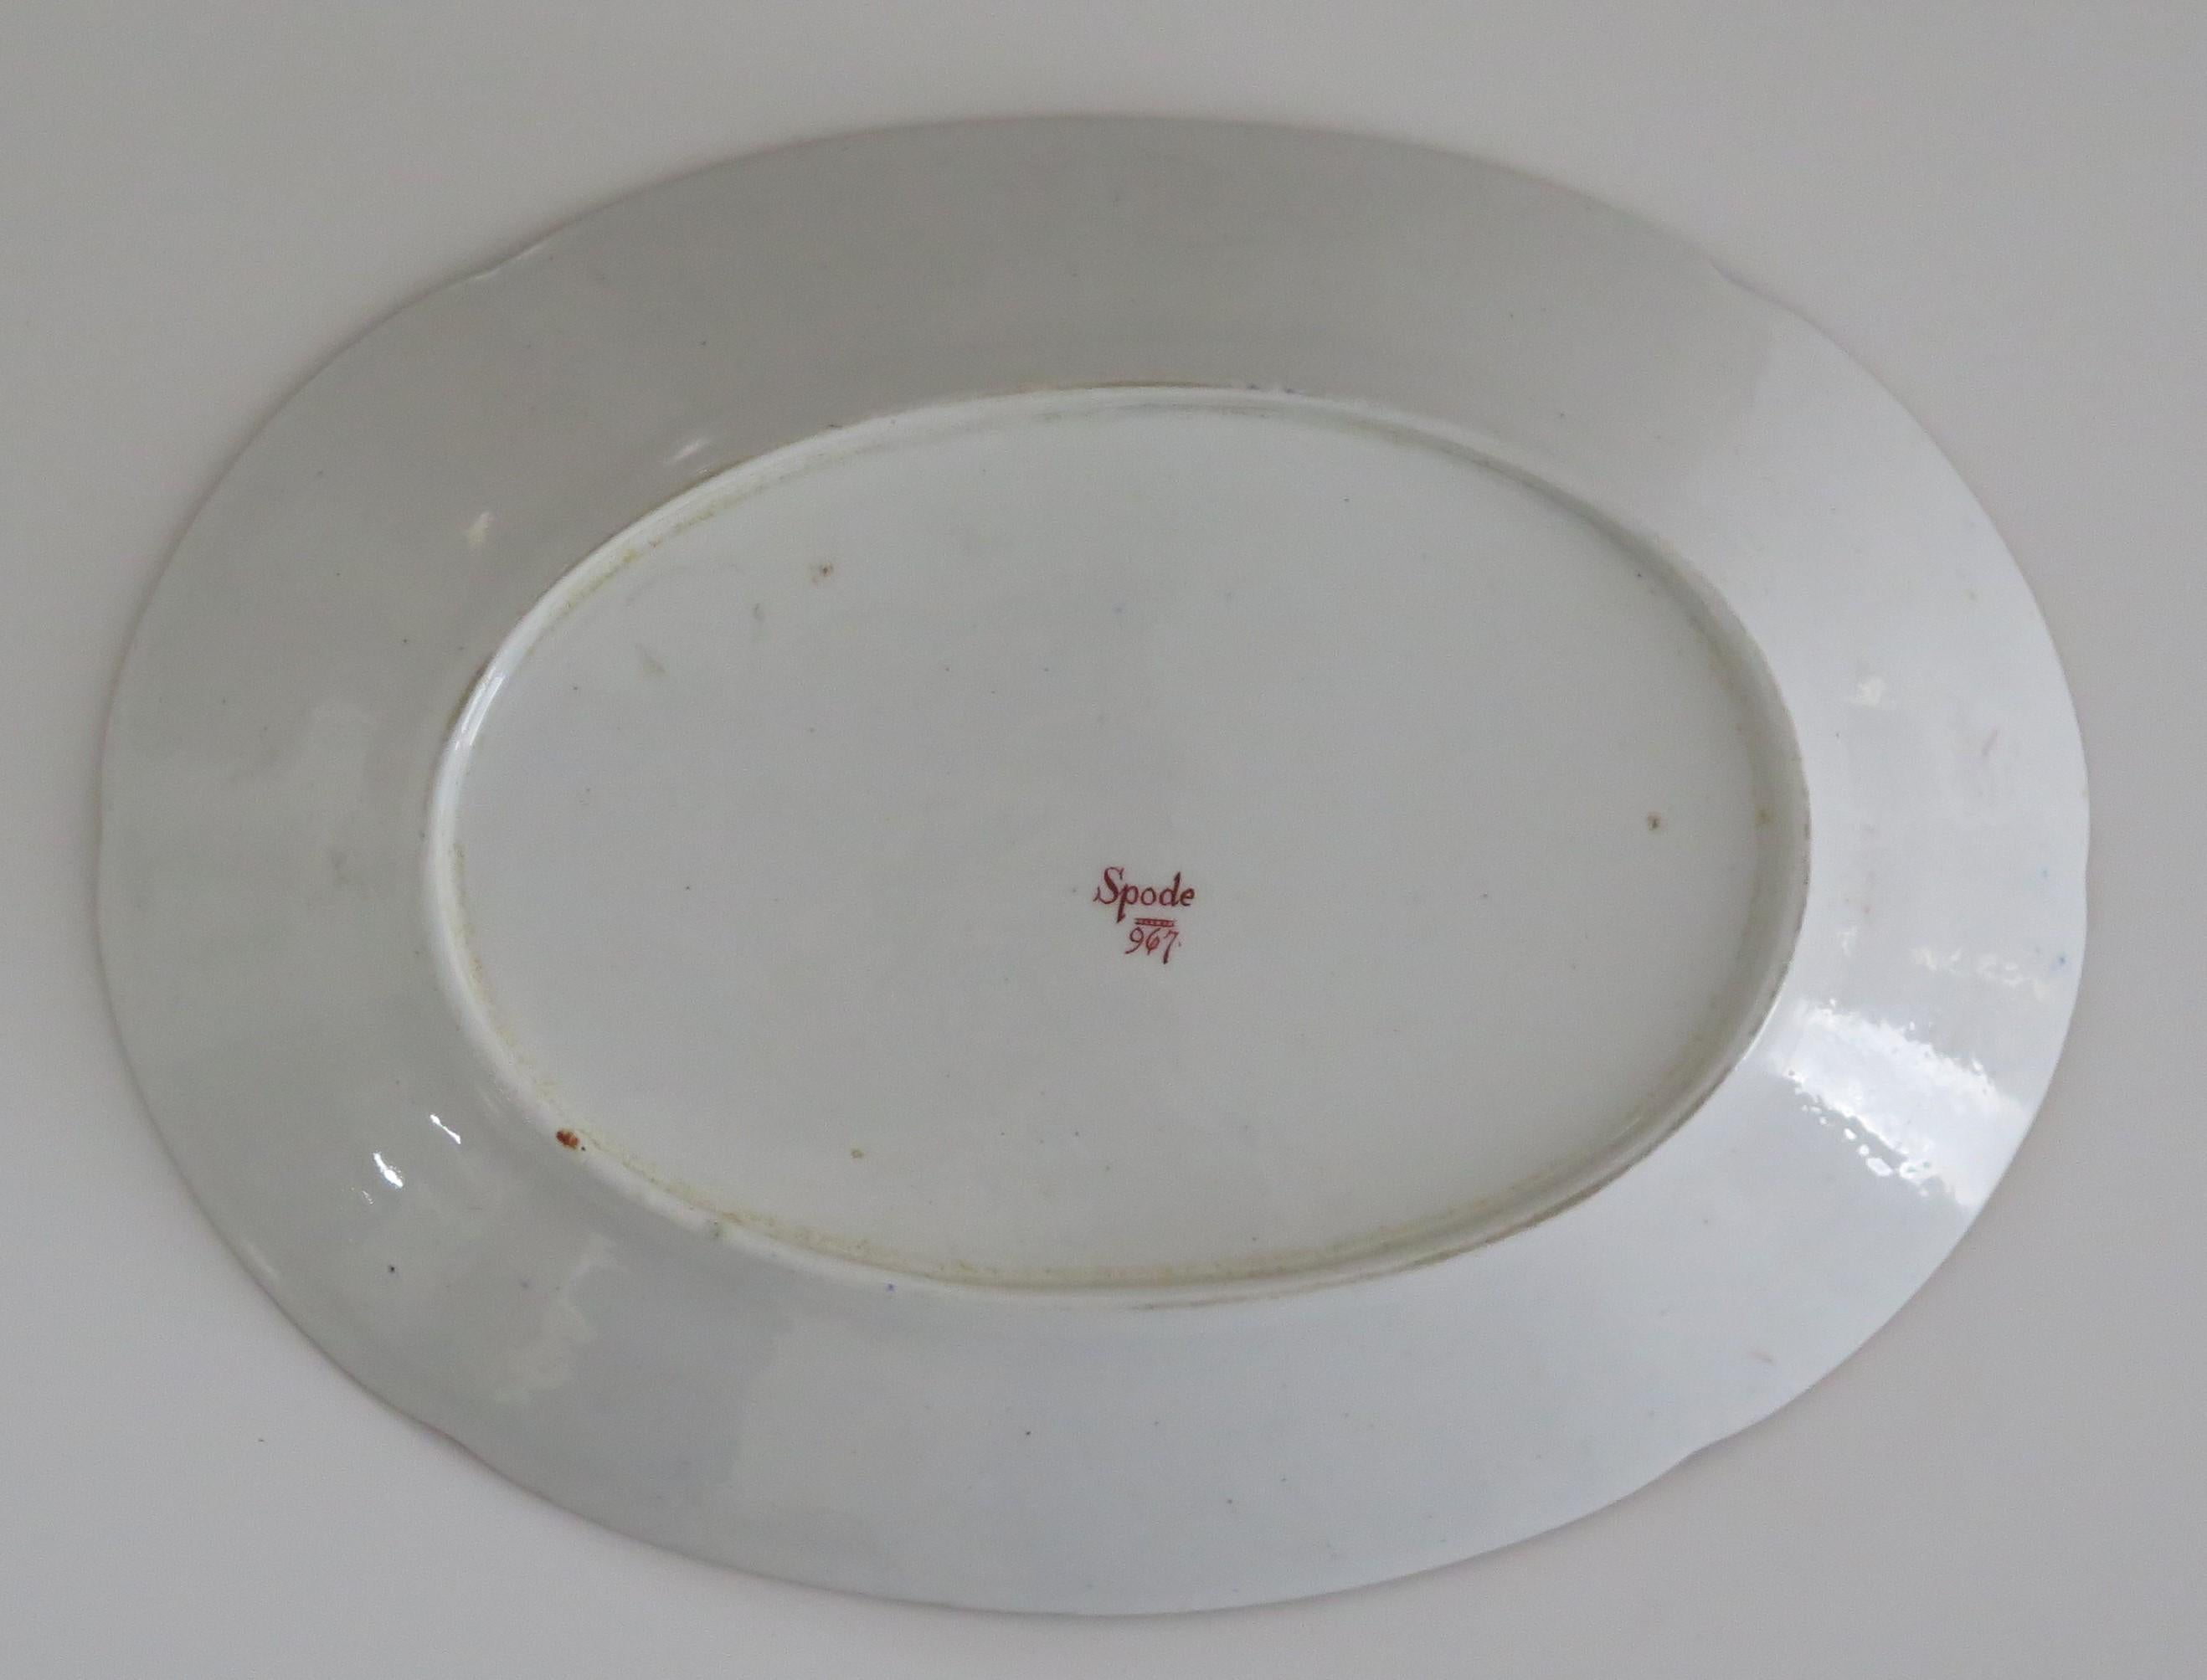 Spode Porcelain Serving Platter or Dish Hand Painted & Gilded Ptn 967 circa 1810 For Sale 3